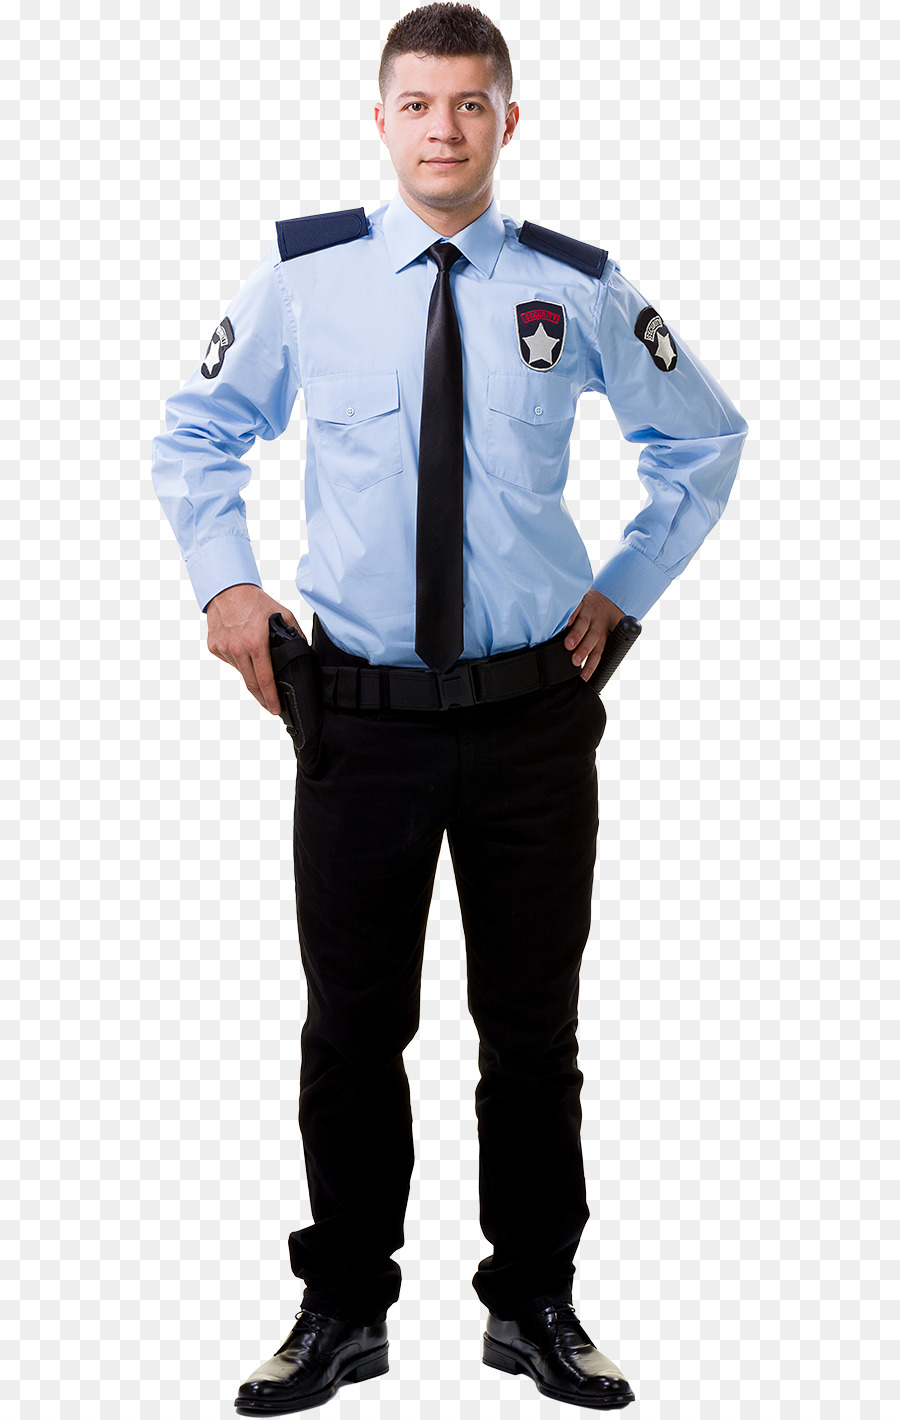 Police officer Security guard Uniform - Police png download - 600*1419 - Free Transparent  Police Officer png Download.